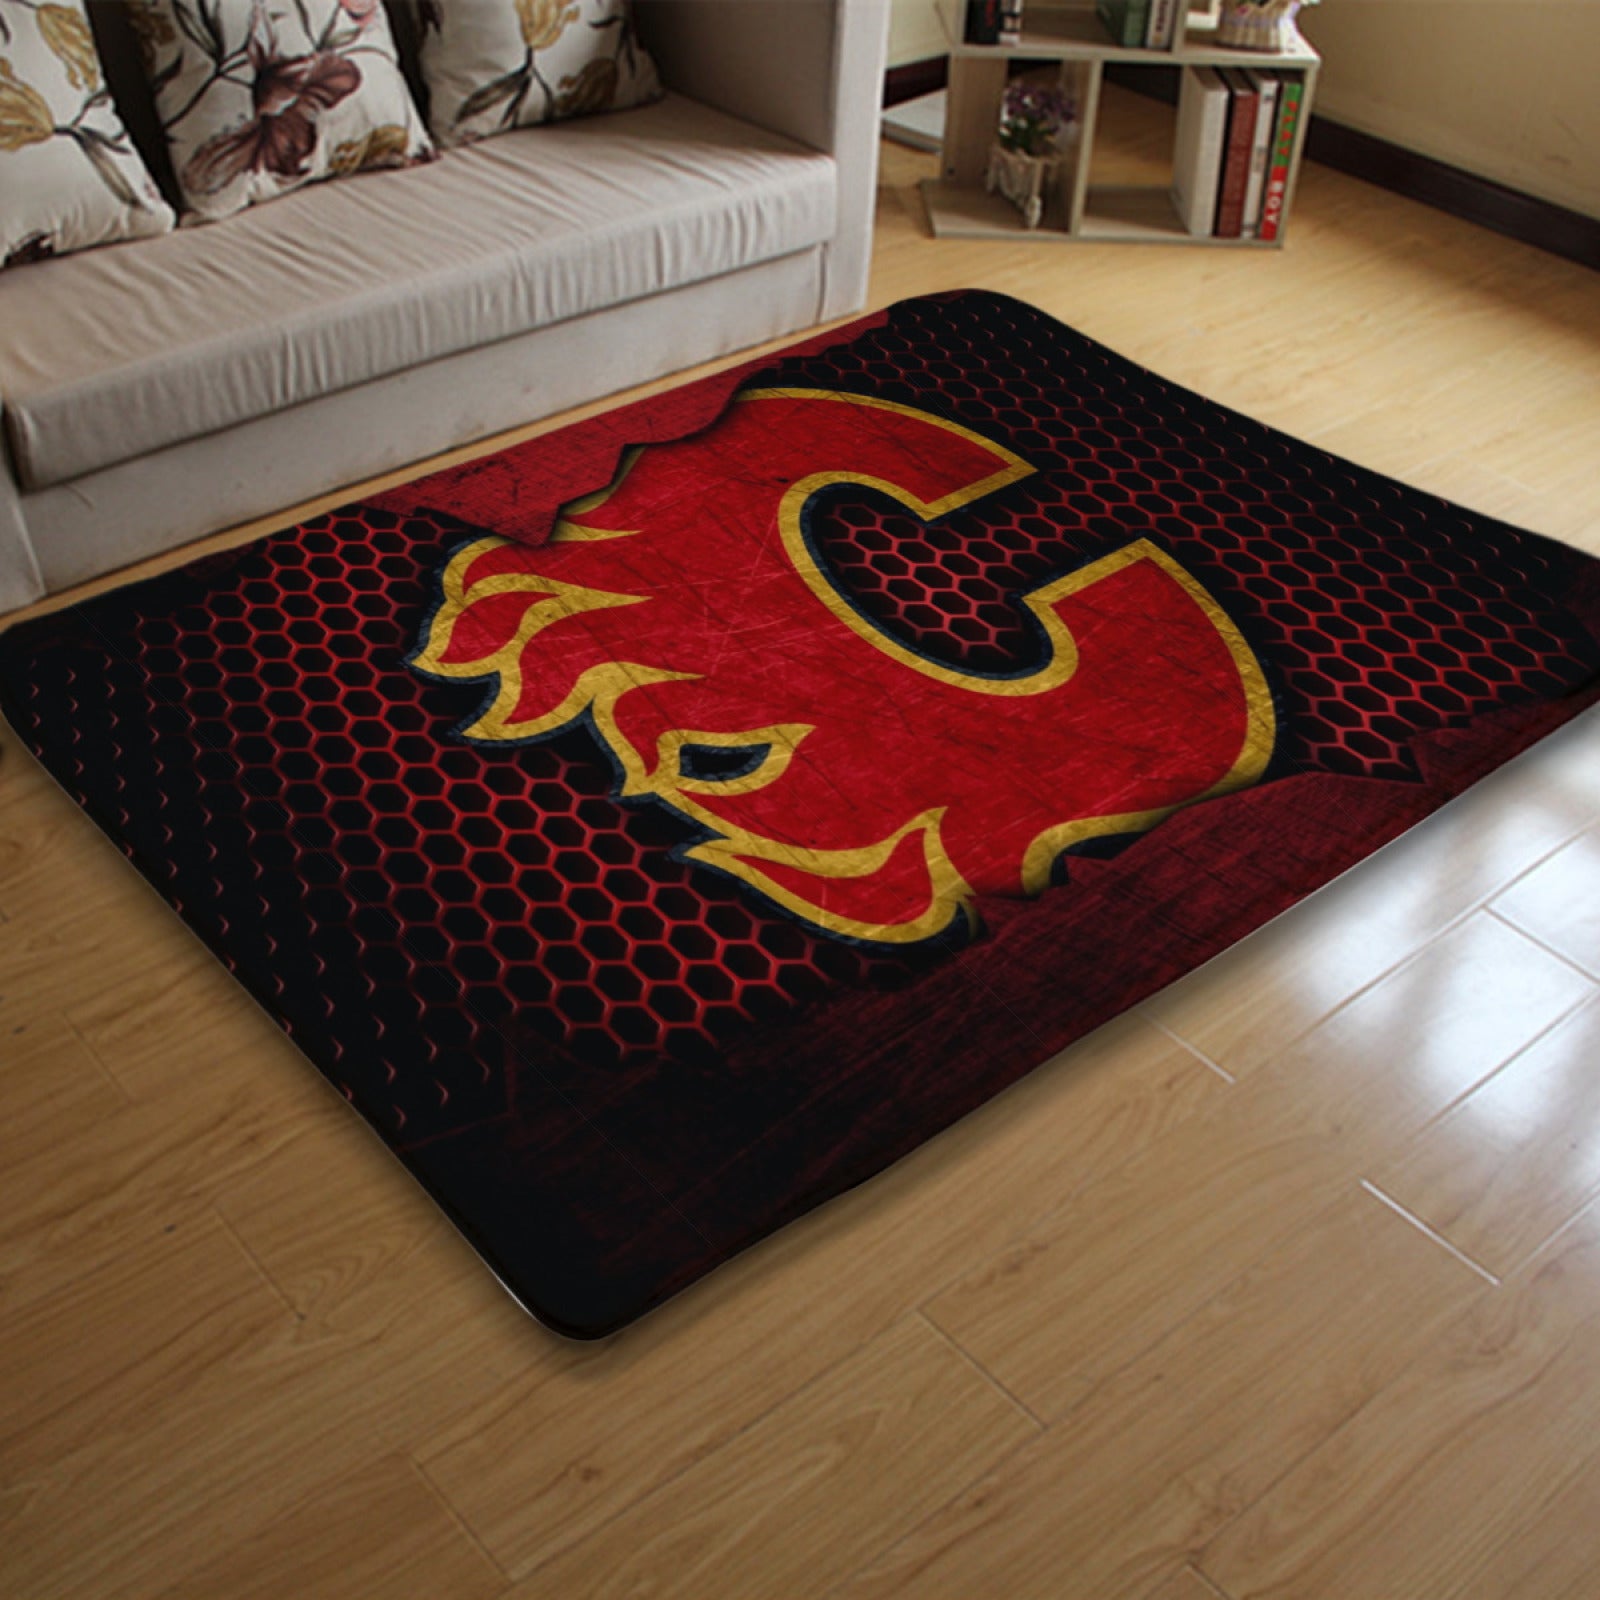 Calgary Flame Hockey League Carpet Living Room Bedroom Mats Kitchen Bathroom Rugs